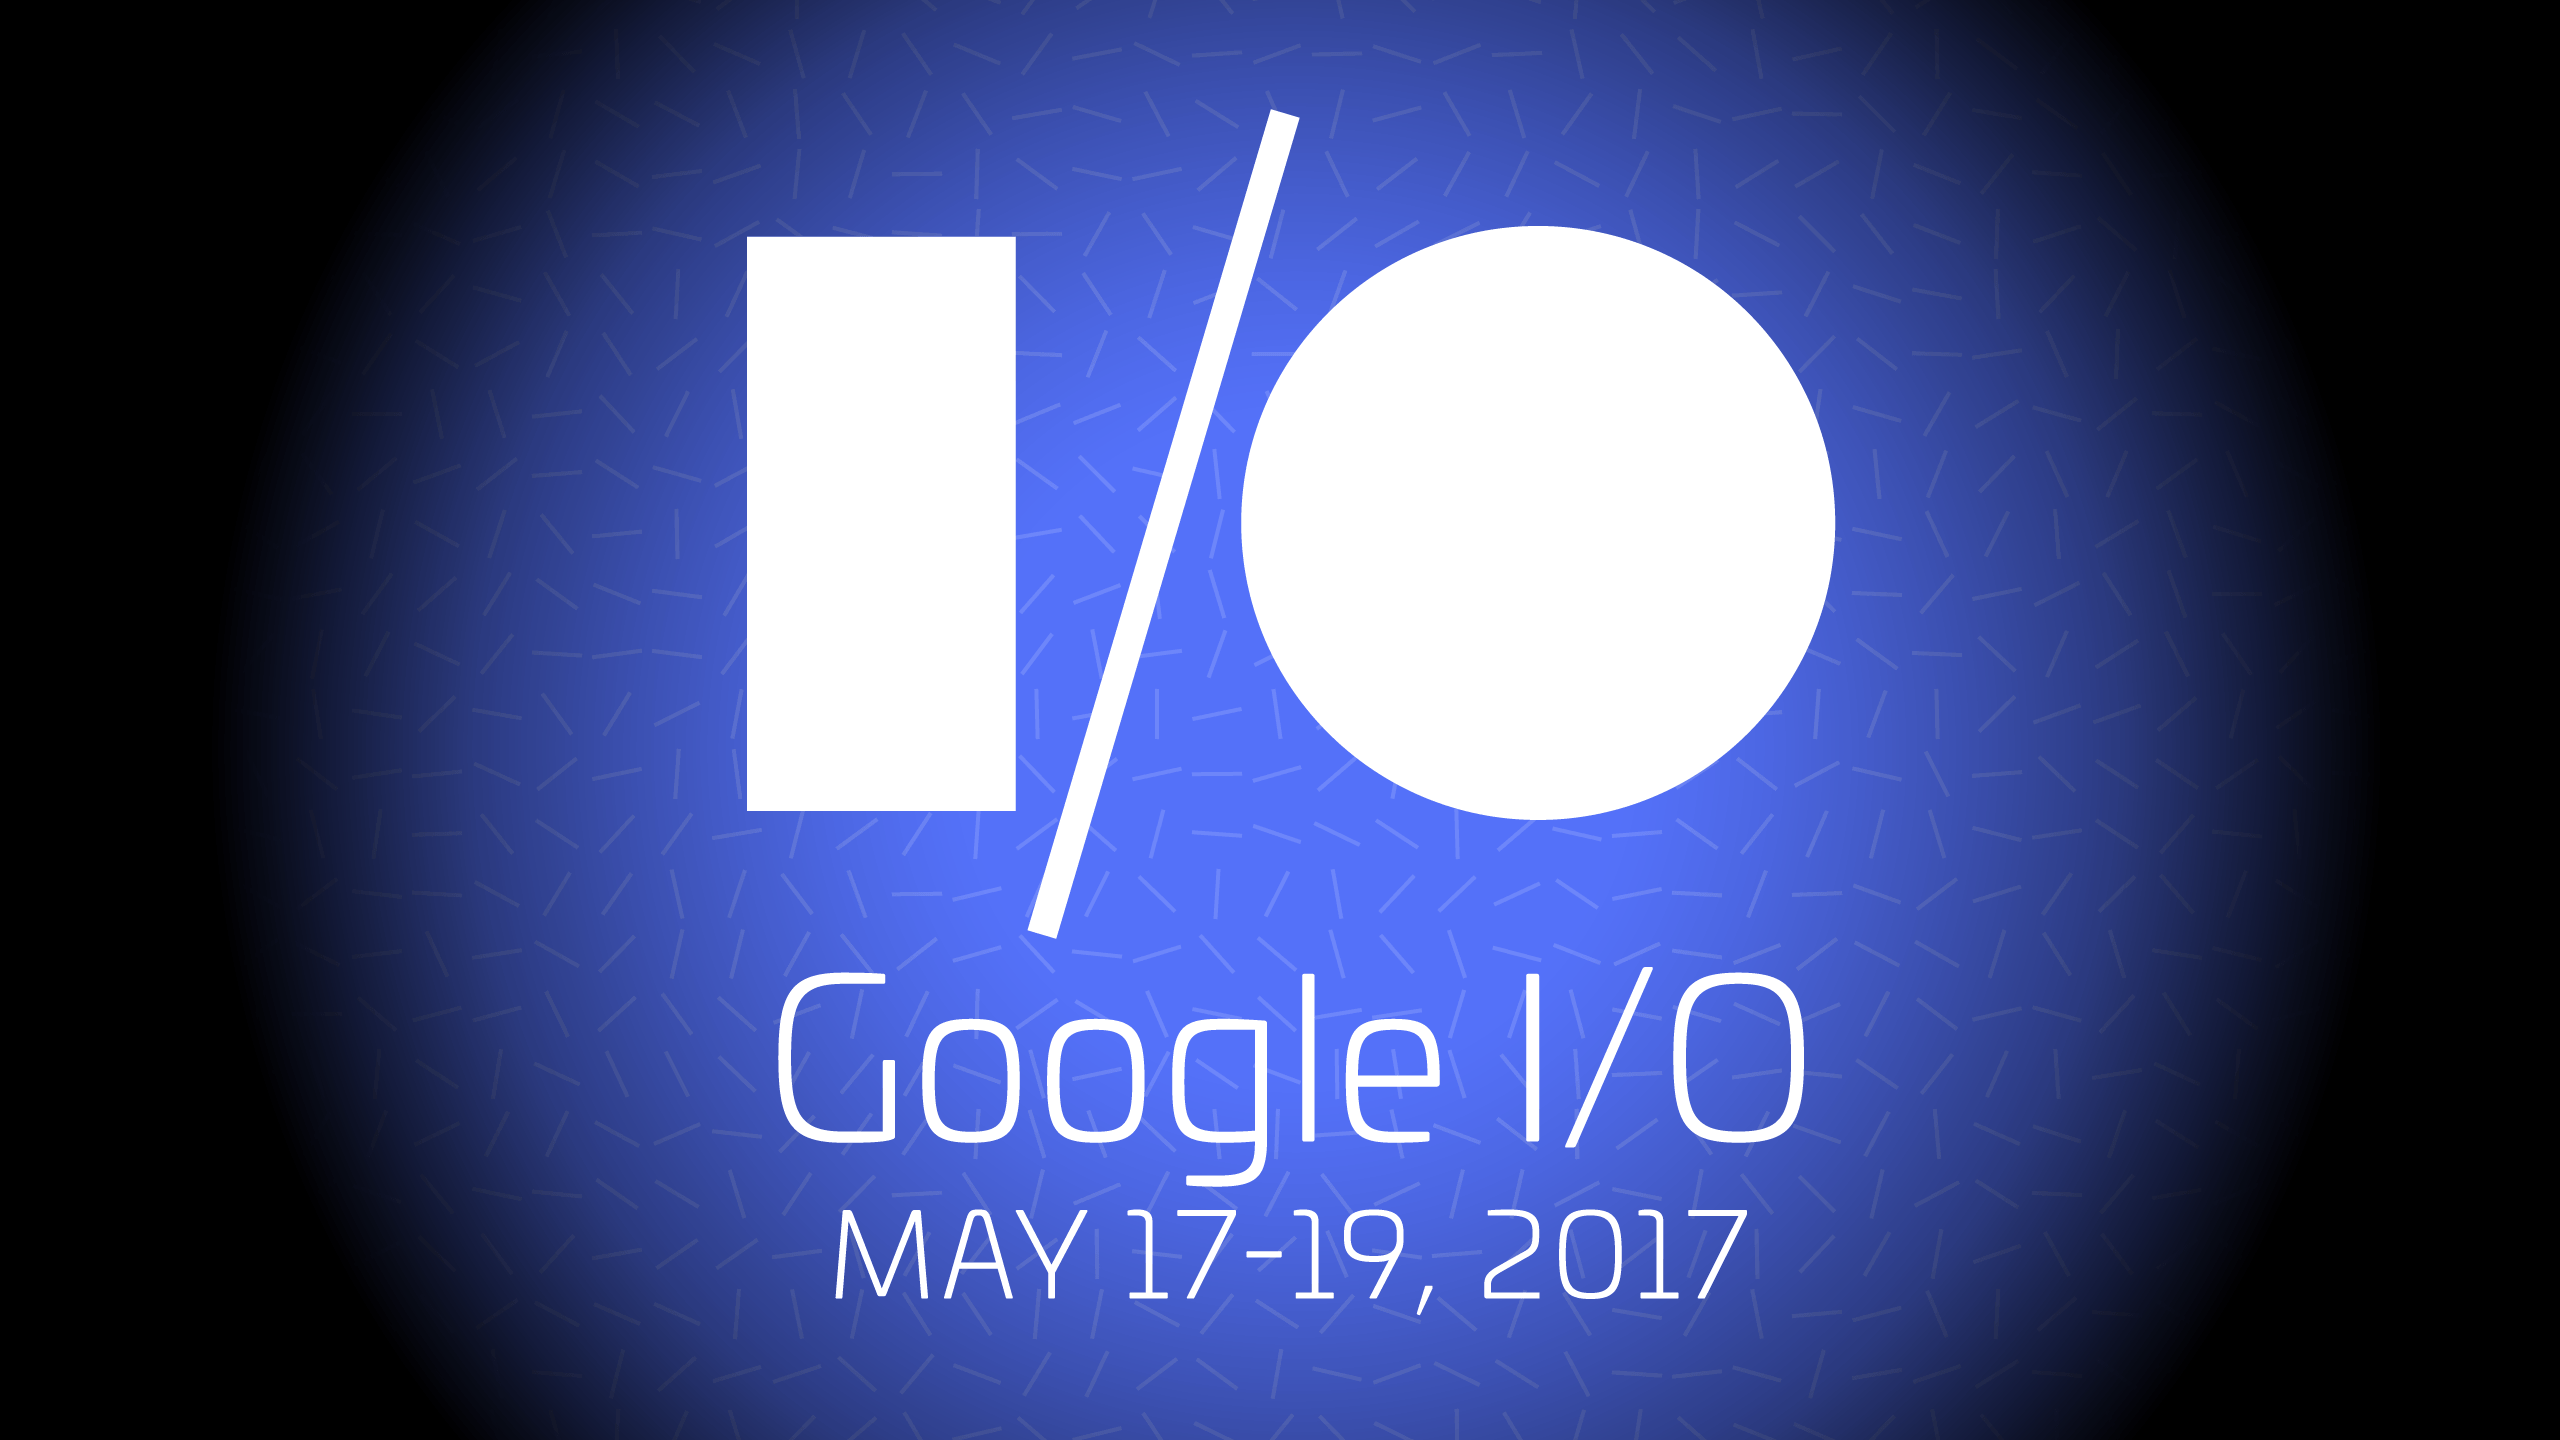 Google host. Google 2017. Google i/o. Io 2017.